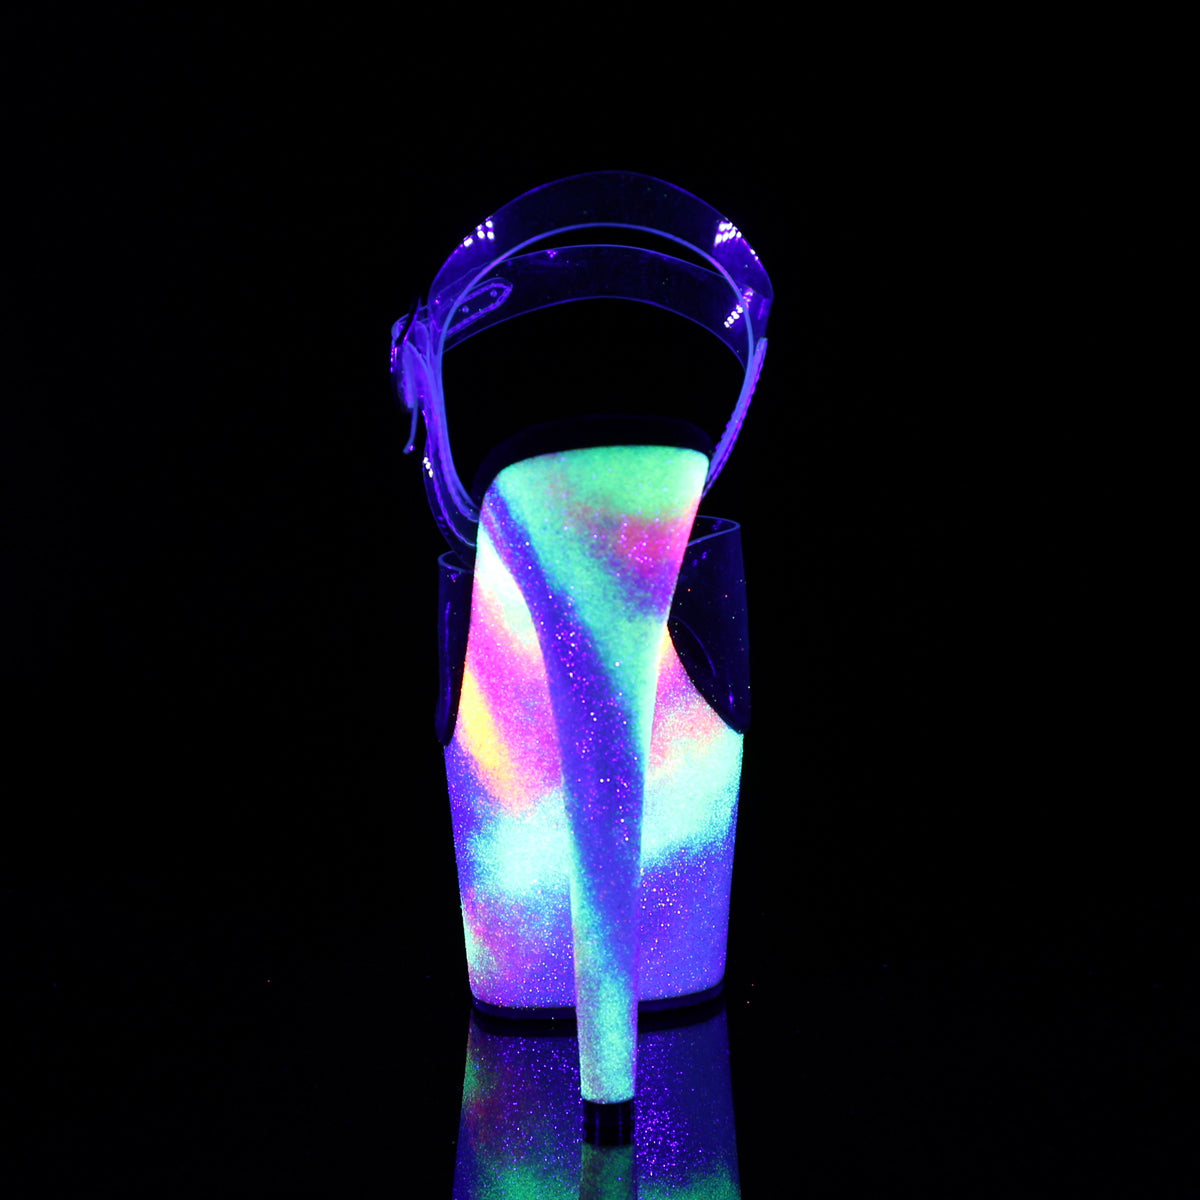 ADORE-708GXY Clear/Neon Galaxy Glitter Platform Sandal Pleaser